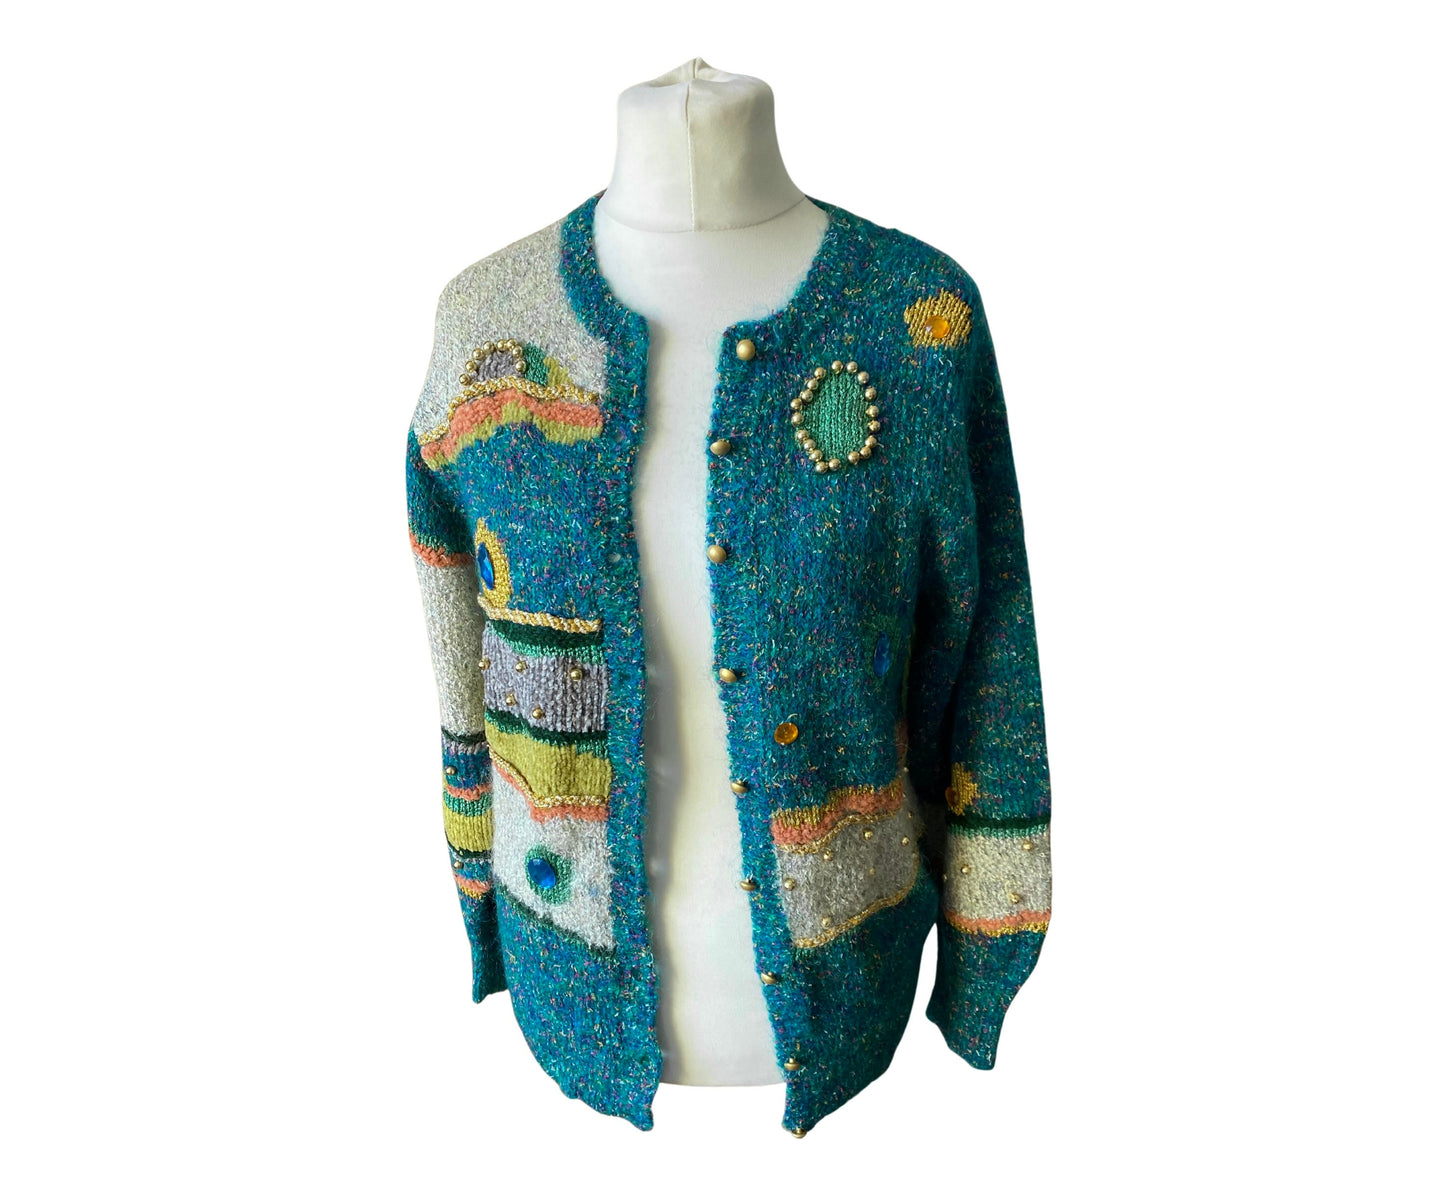 Vintage multi coloured and textured embellished cardigan. Approx U.K. size 10-16